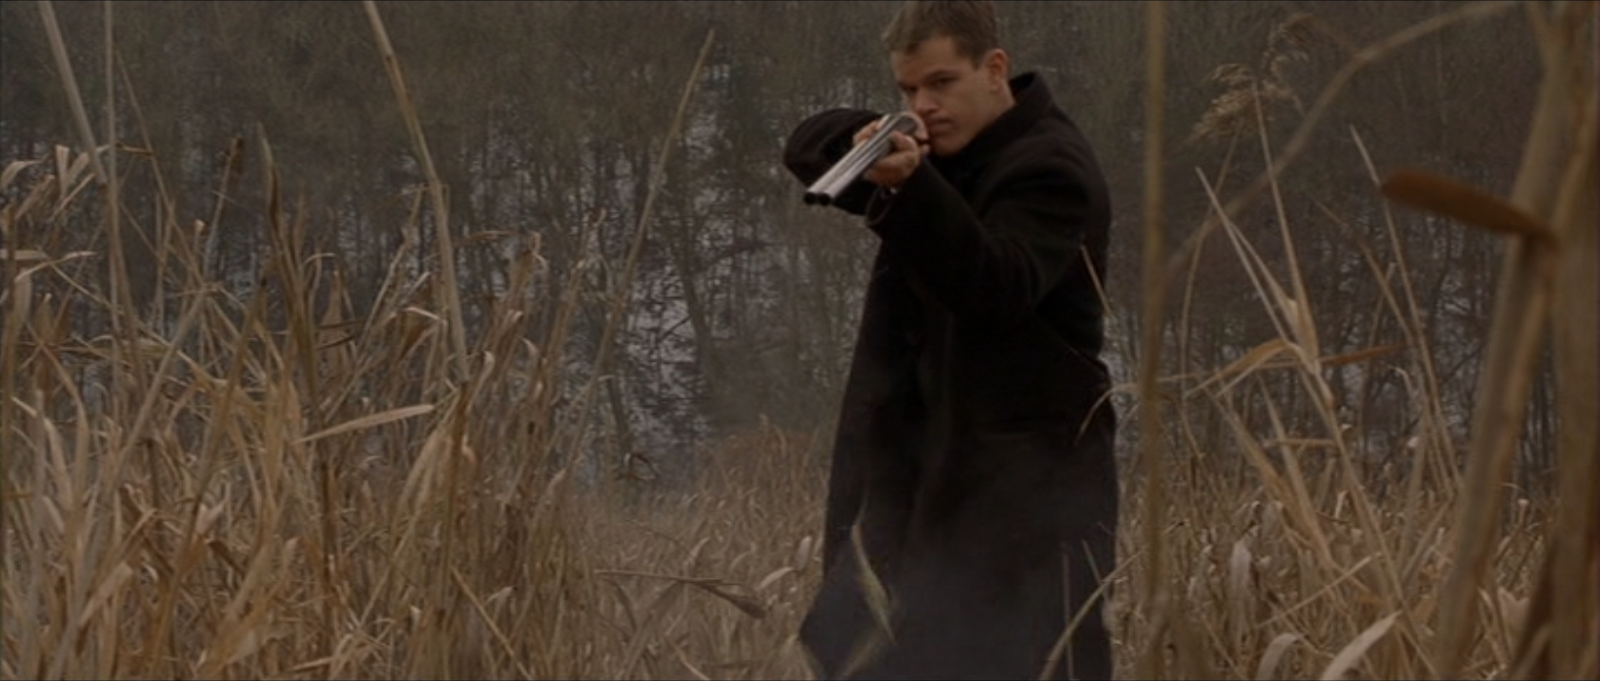 Bourne with a Double Barrel Shotgun